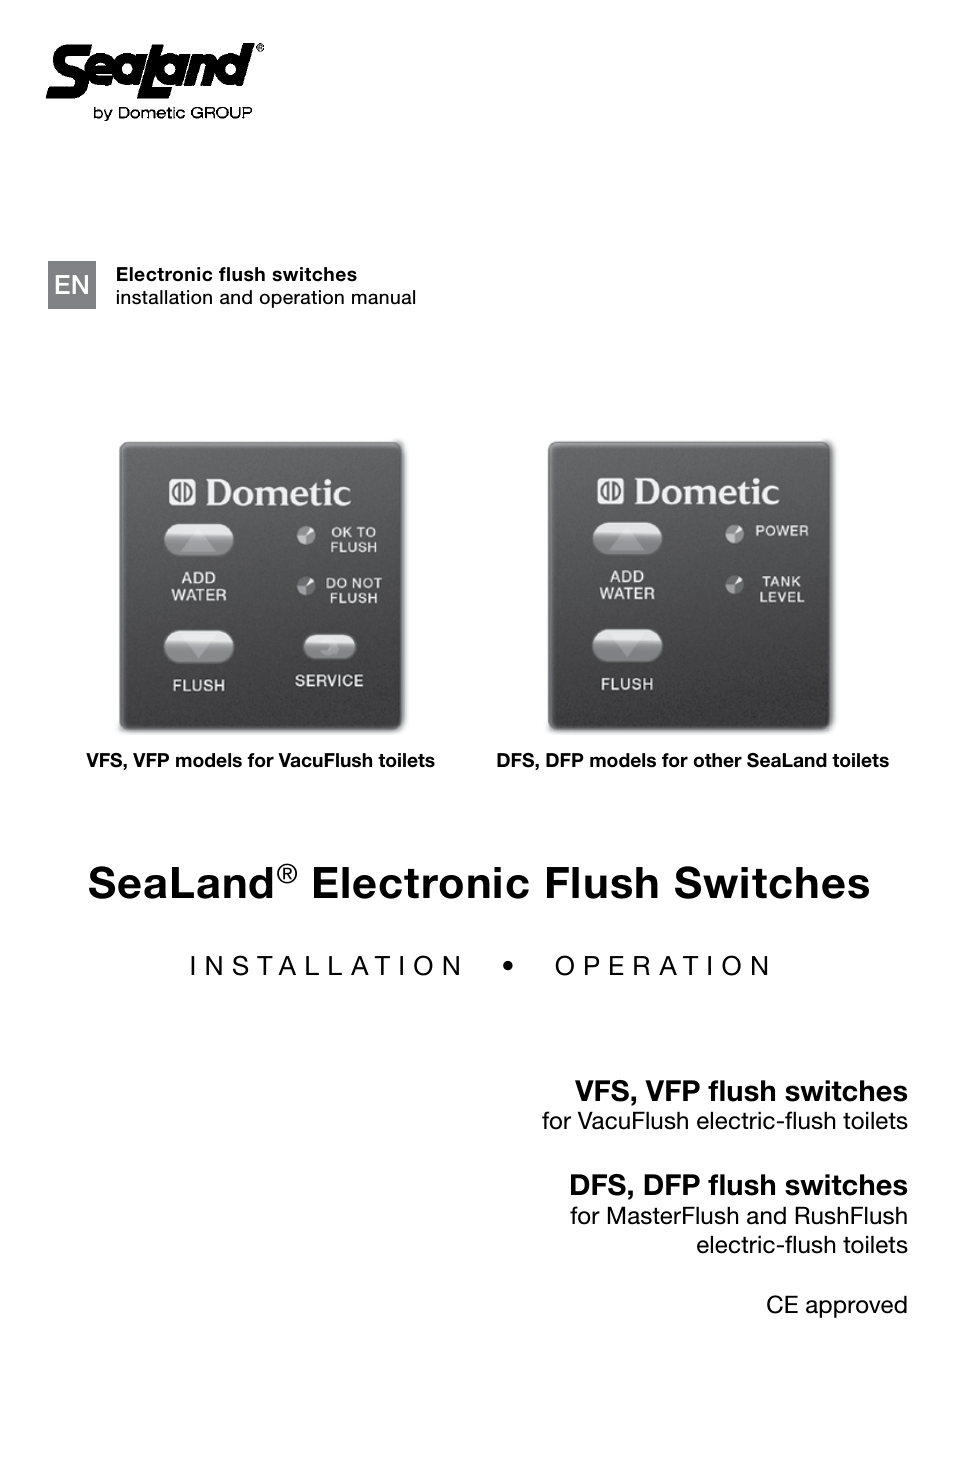 VFP flush switches